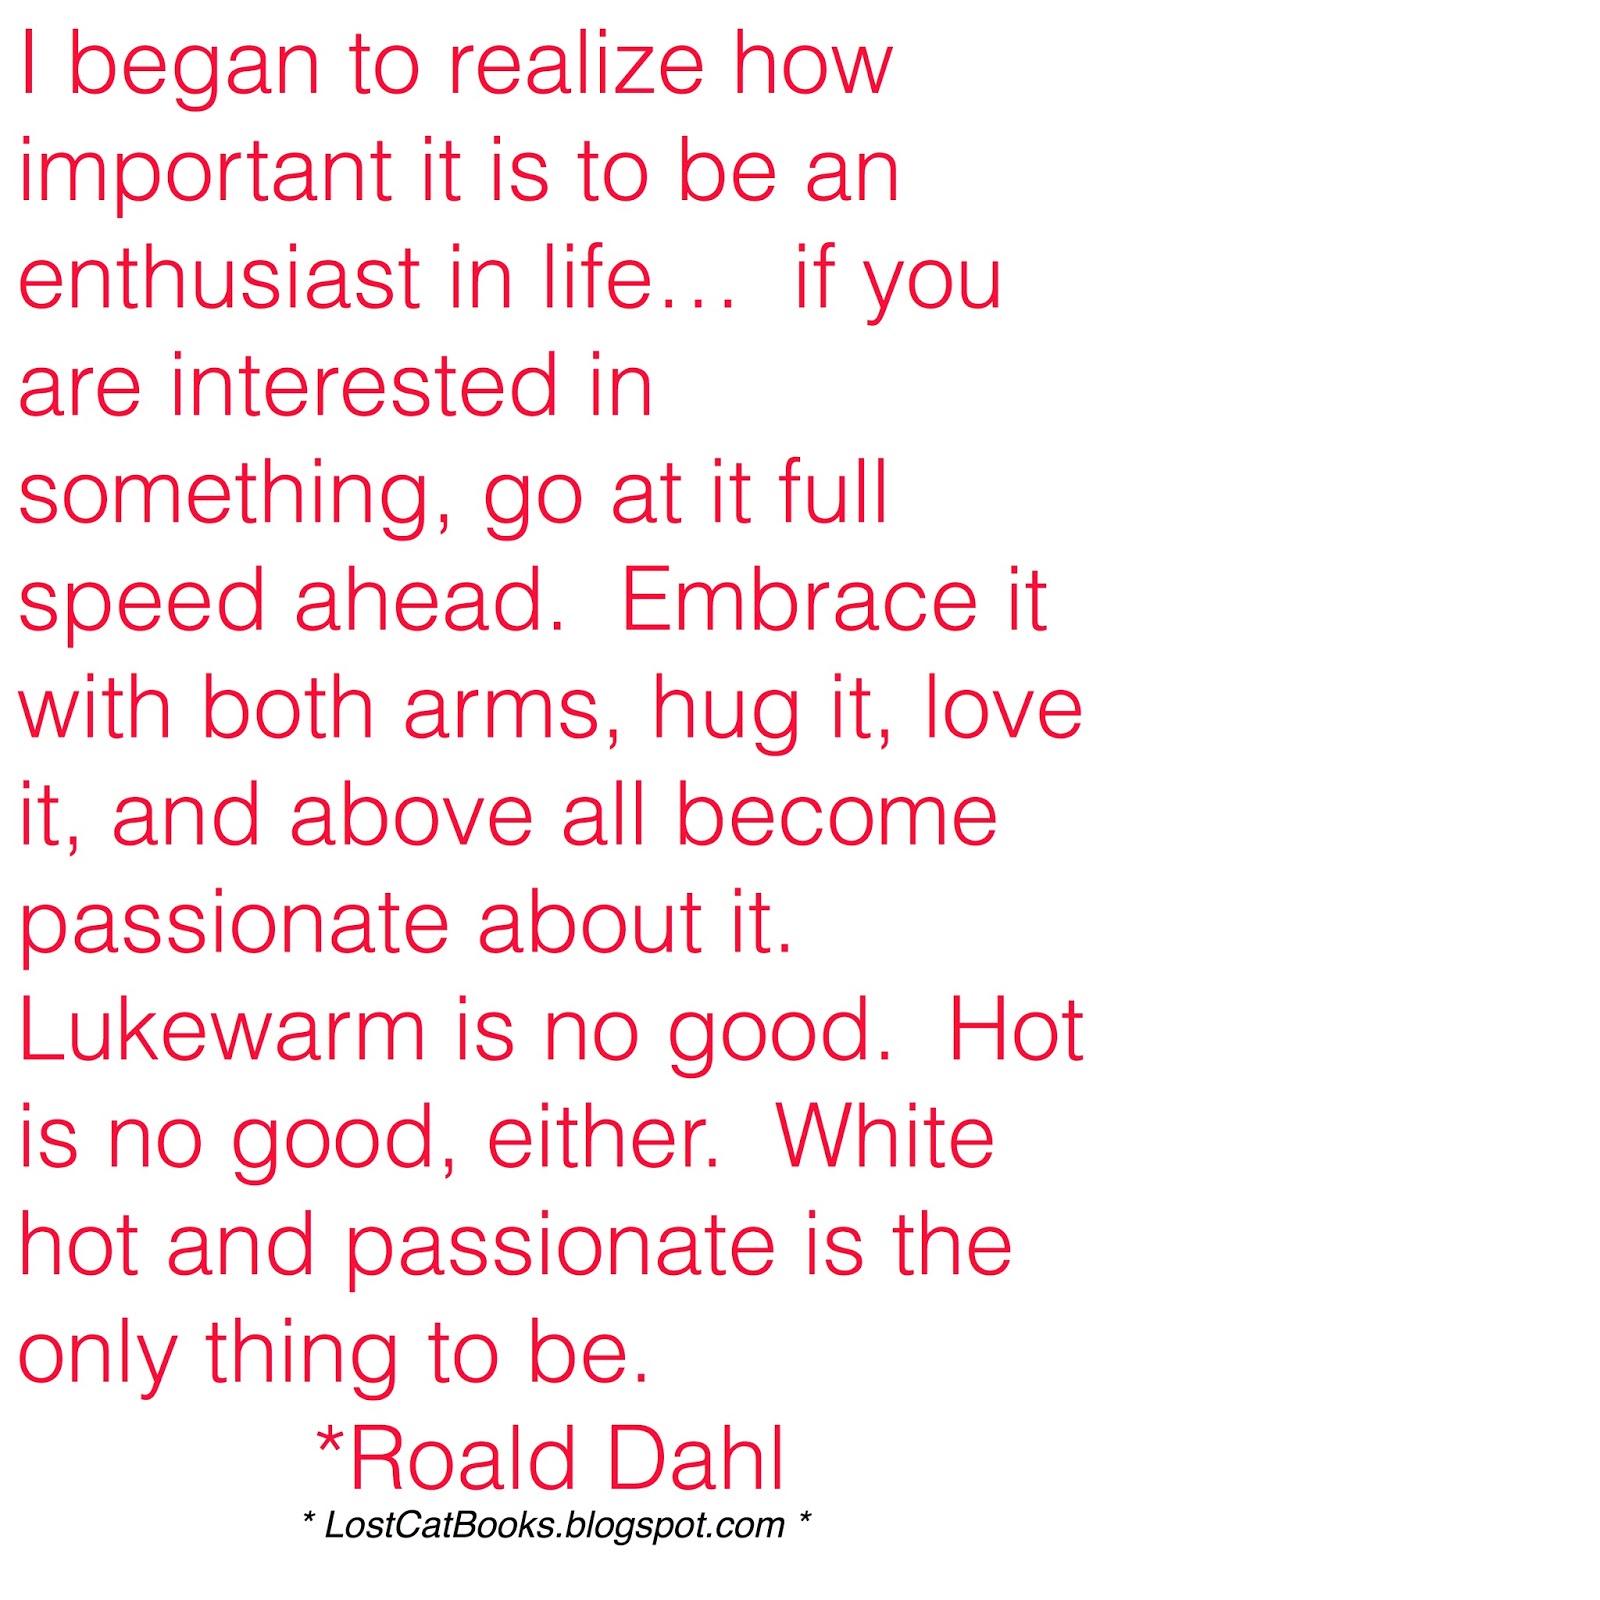 Lost Cat Books: It's Roald Dahl Day! My Favorite Dahl Quotes Episode 8